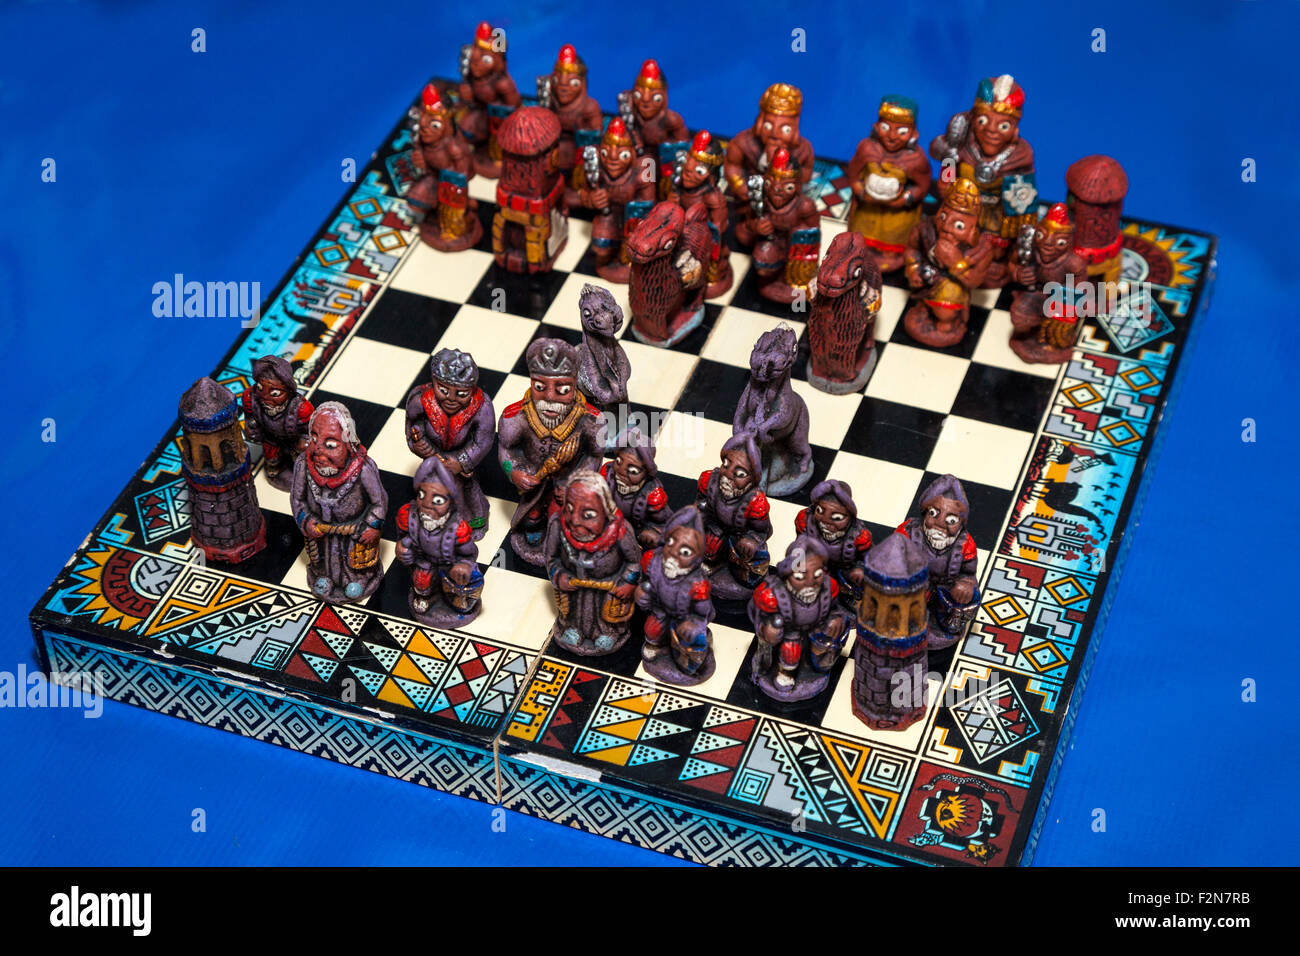 juego-de-ajedrez-tallado-a-mano-piezas-que-representan-a-conquistadores-espanoles-e-indios-incas-f2n7rb.jpg